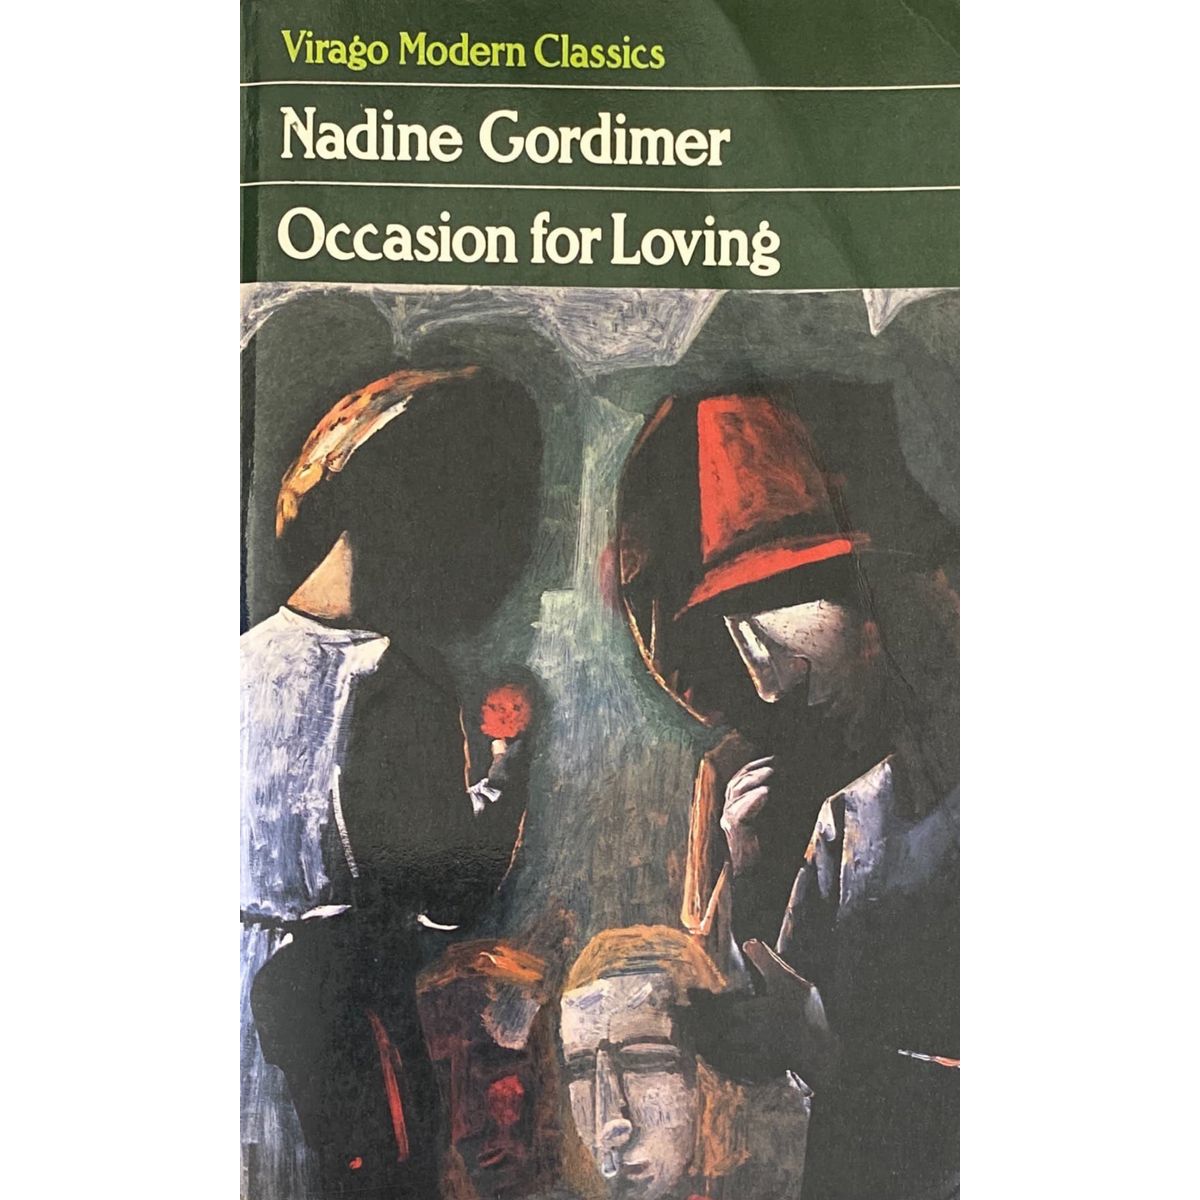 ISBN: 9780860683124 / 0860683125 - Occasion for Loving by Nadine Gordimer [1983]